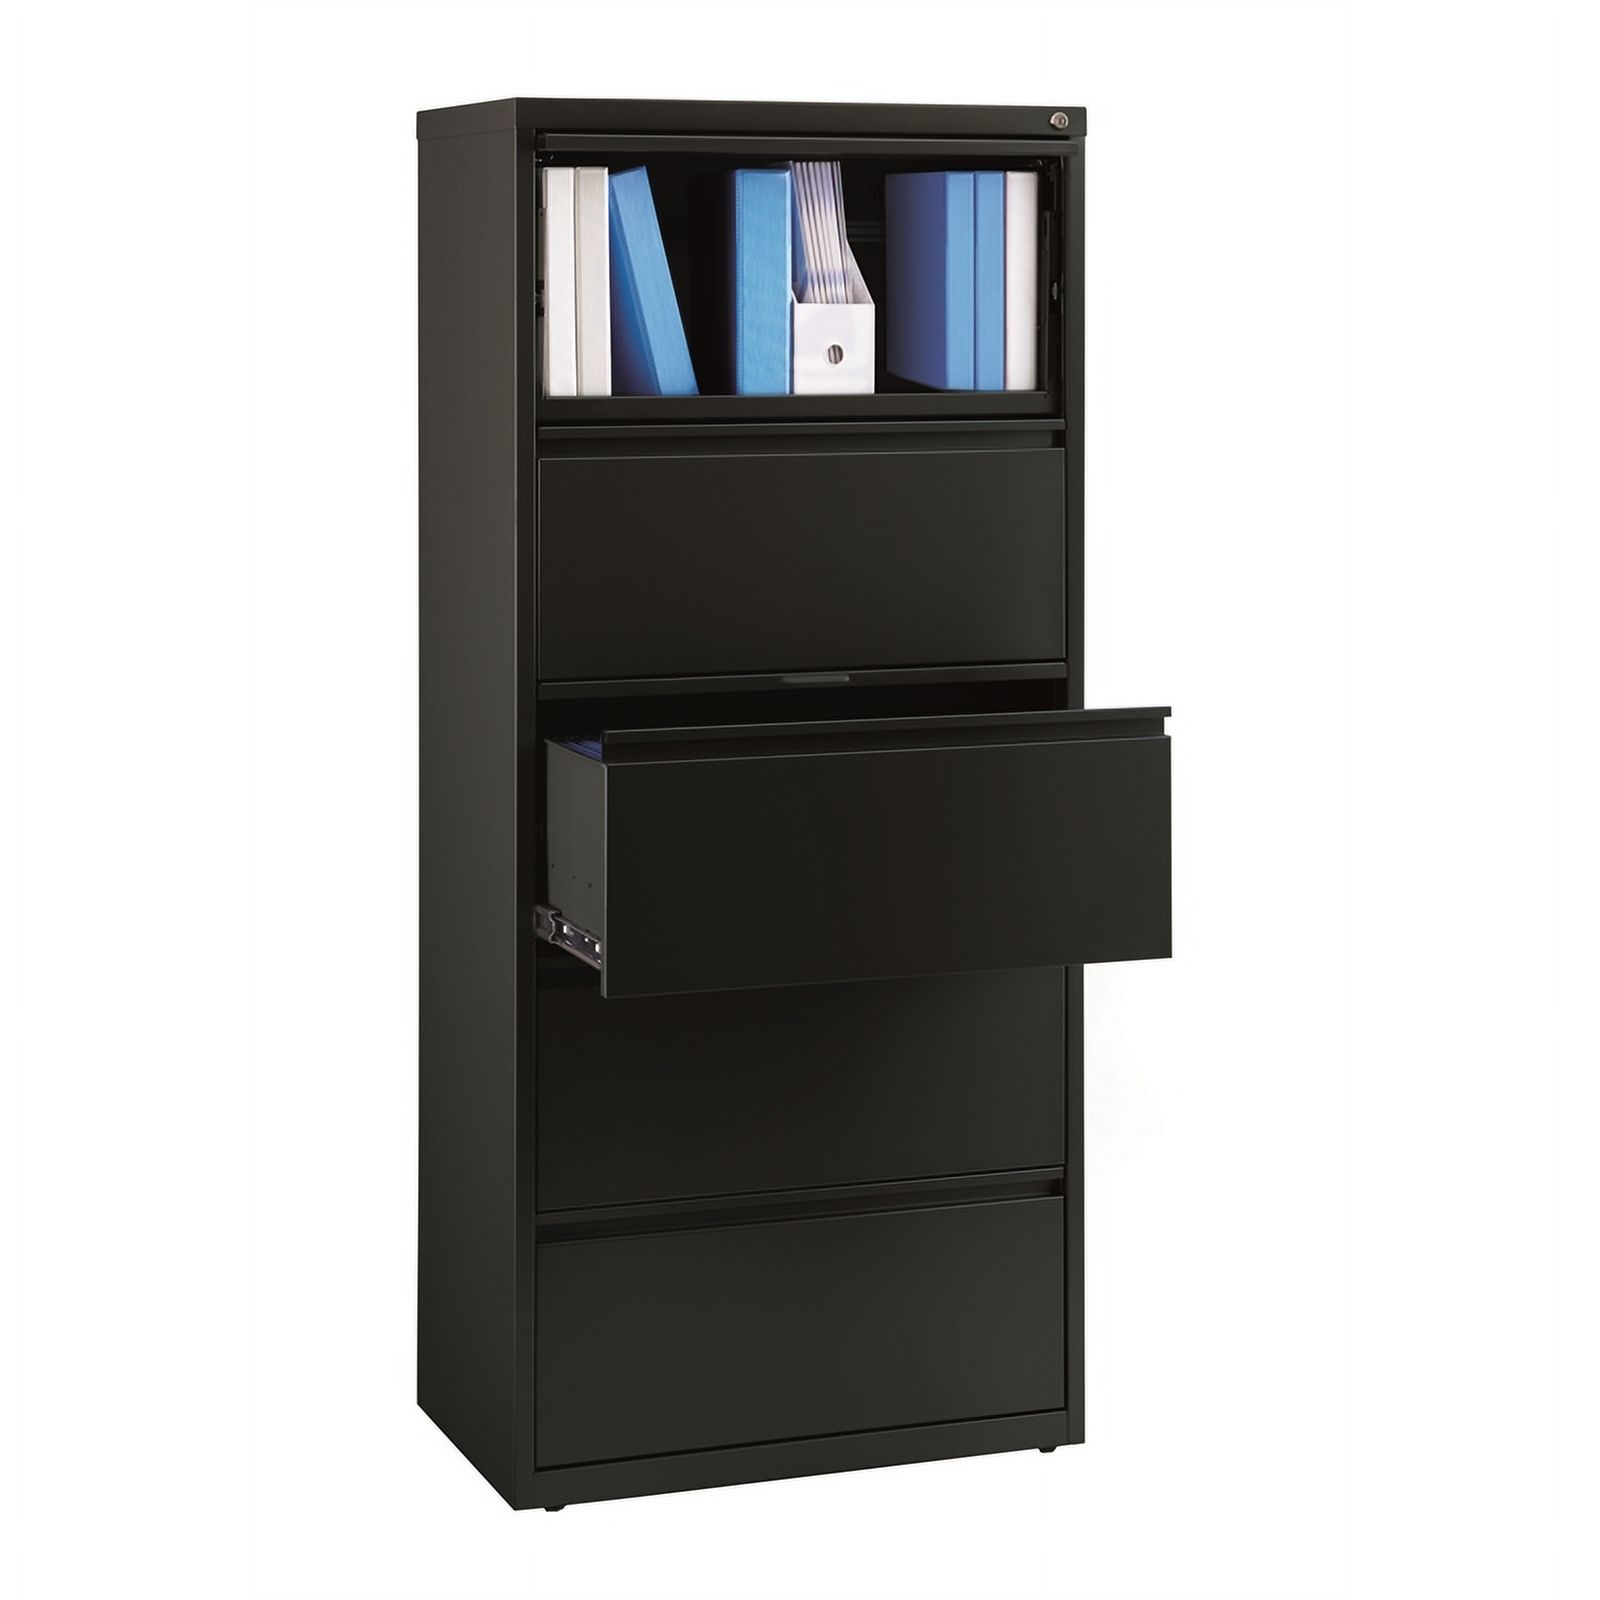 Scranton & Co 30" 5-Drawer Modern Metal Lateral File Cabinet in Black - image 5 of 6